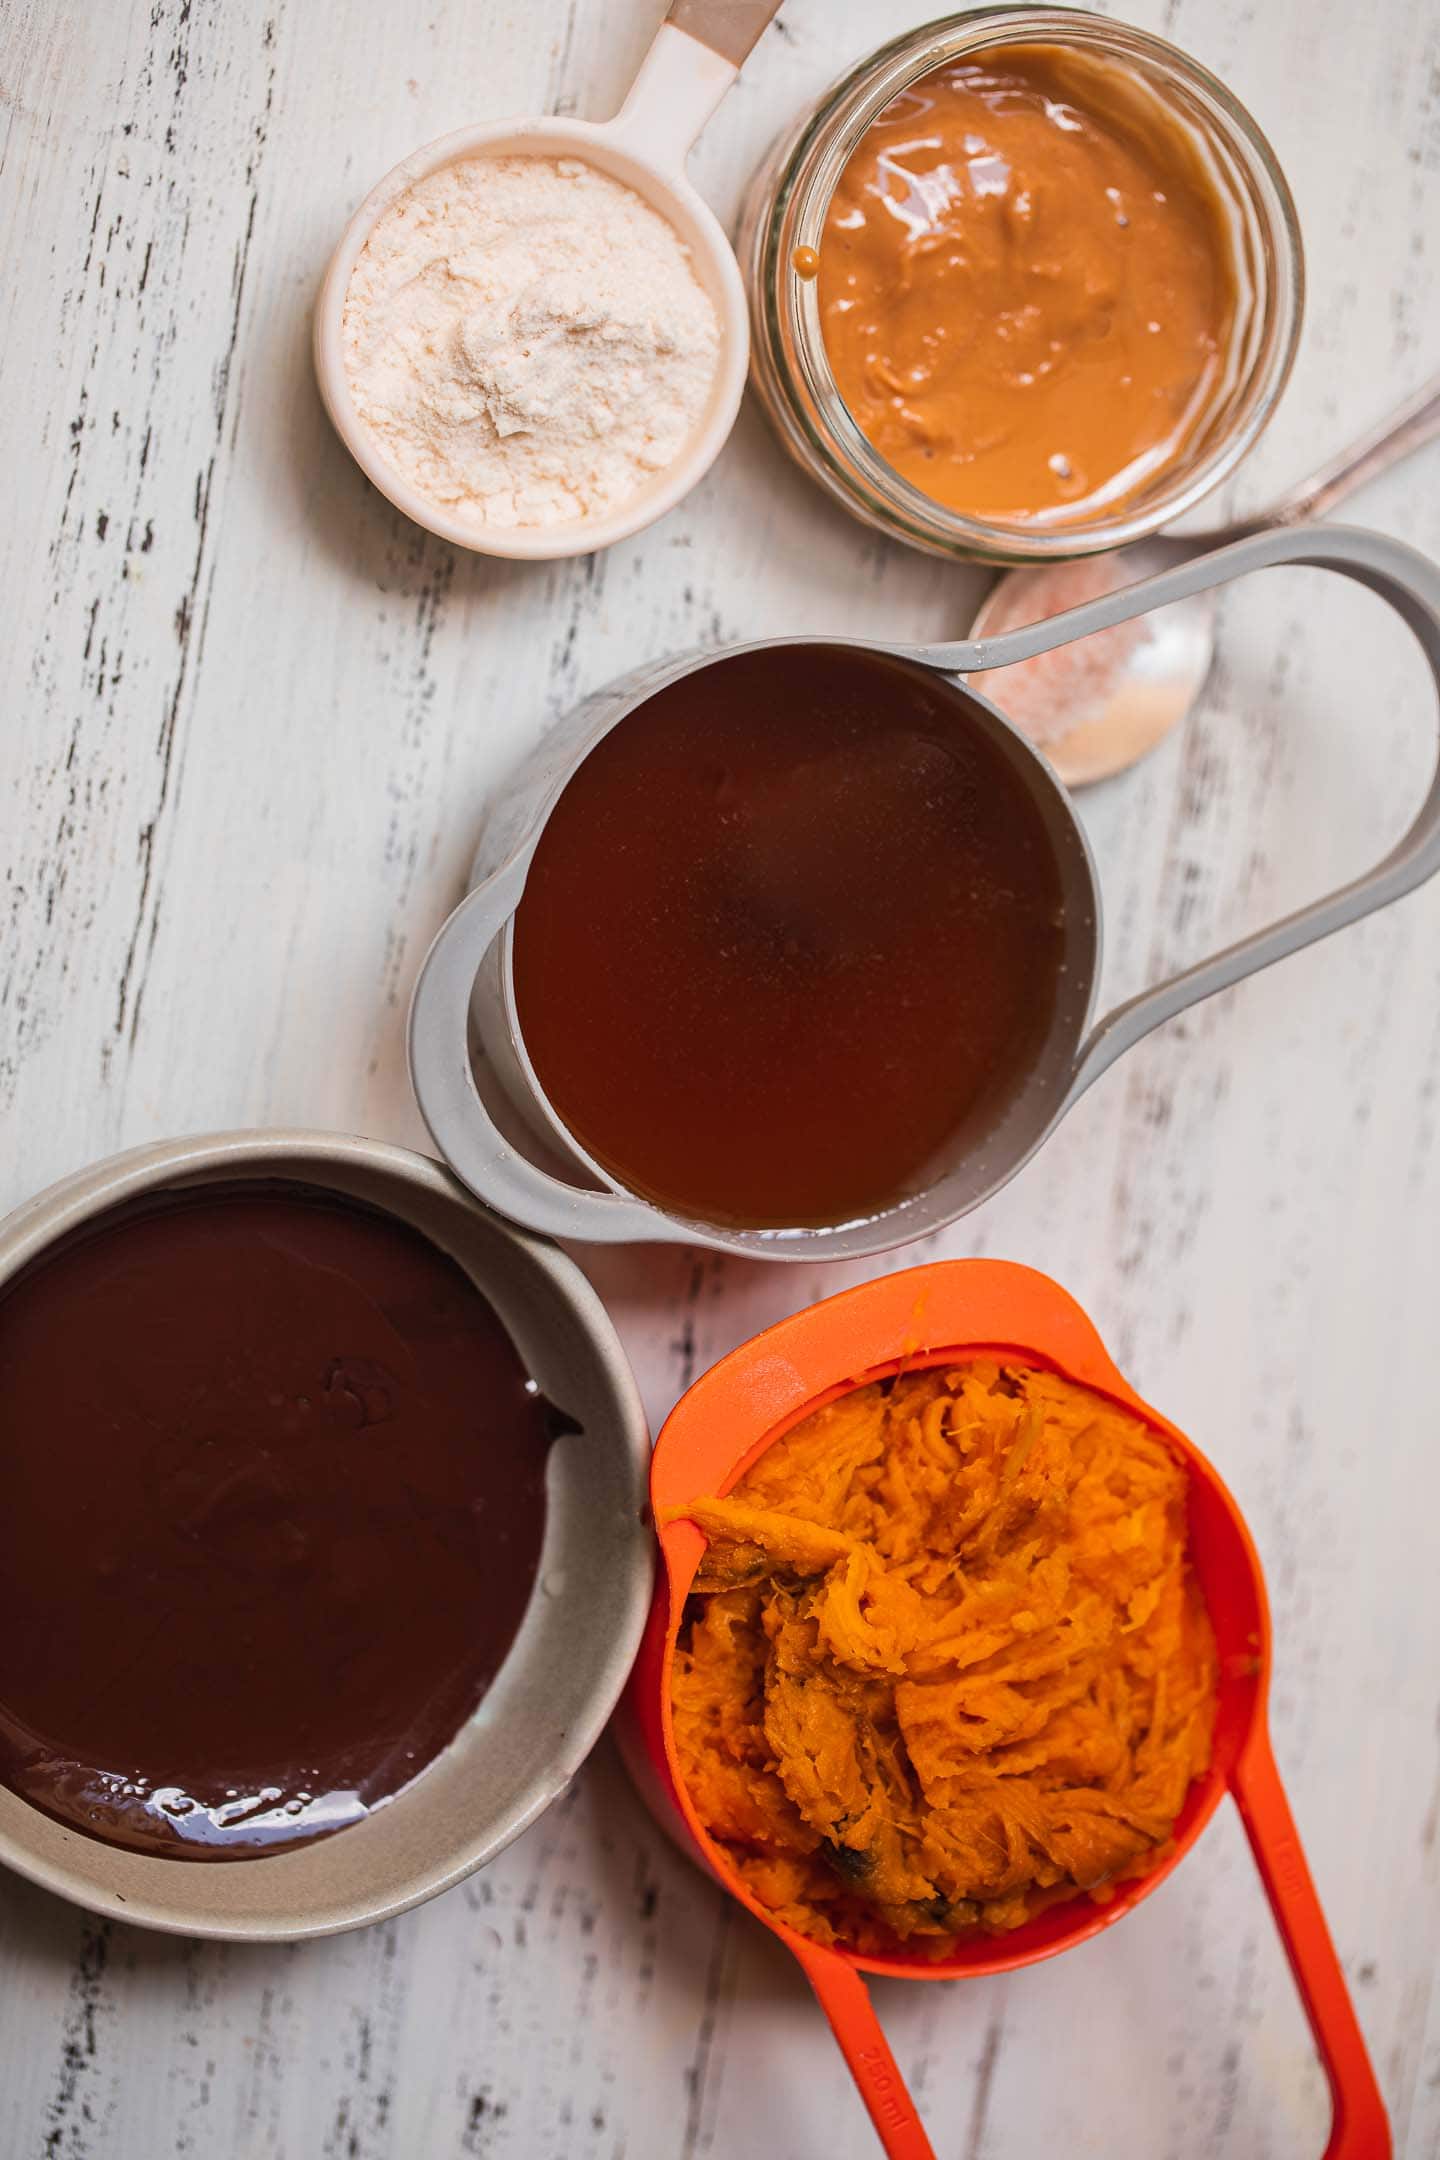 Ingredients for sweet potato brownies